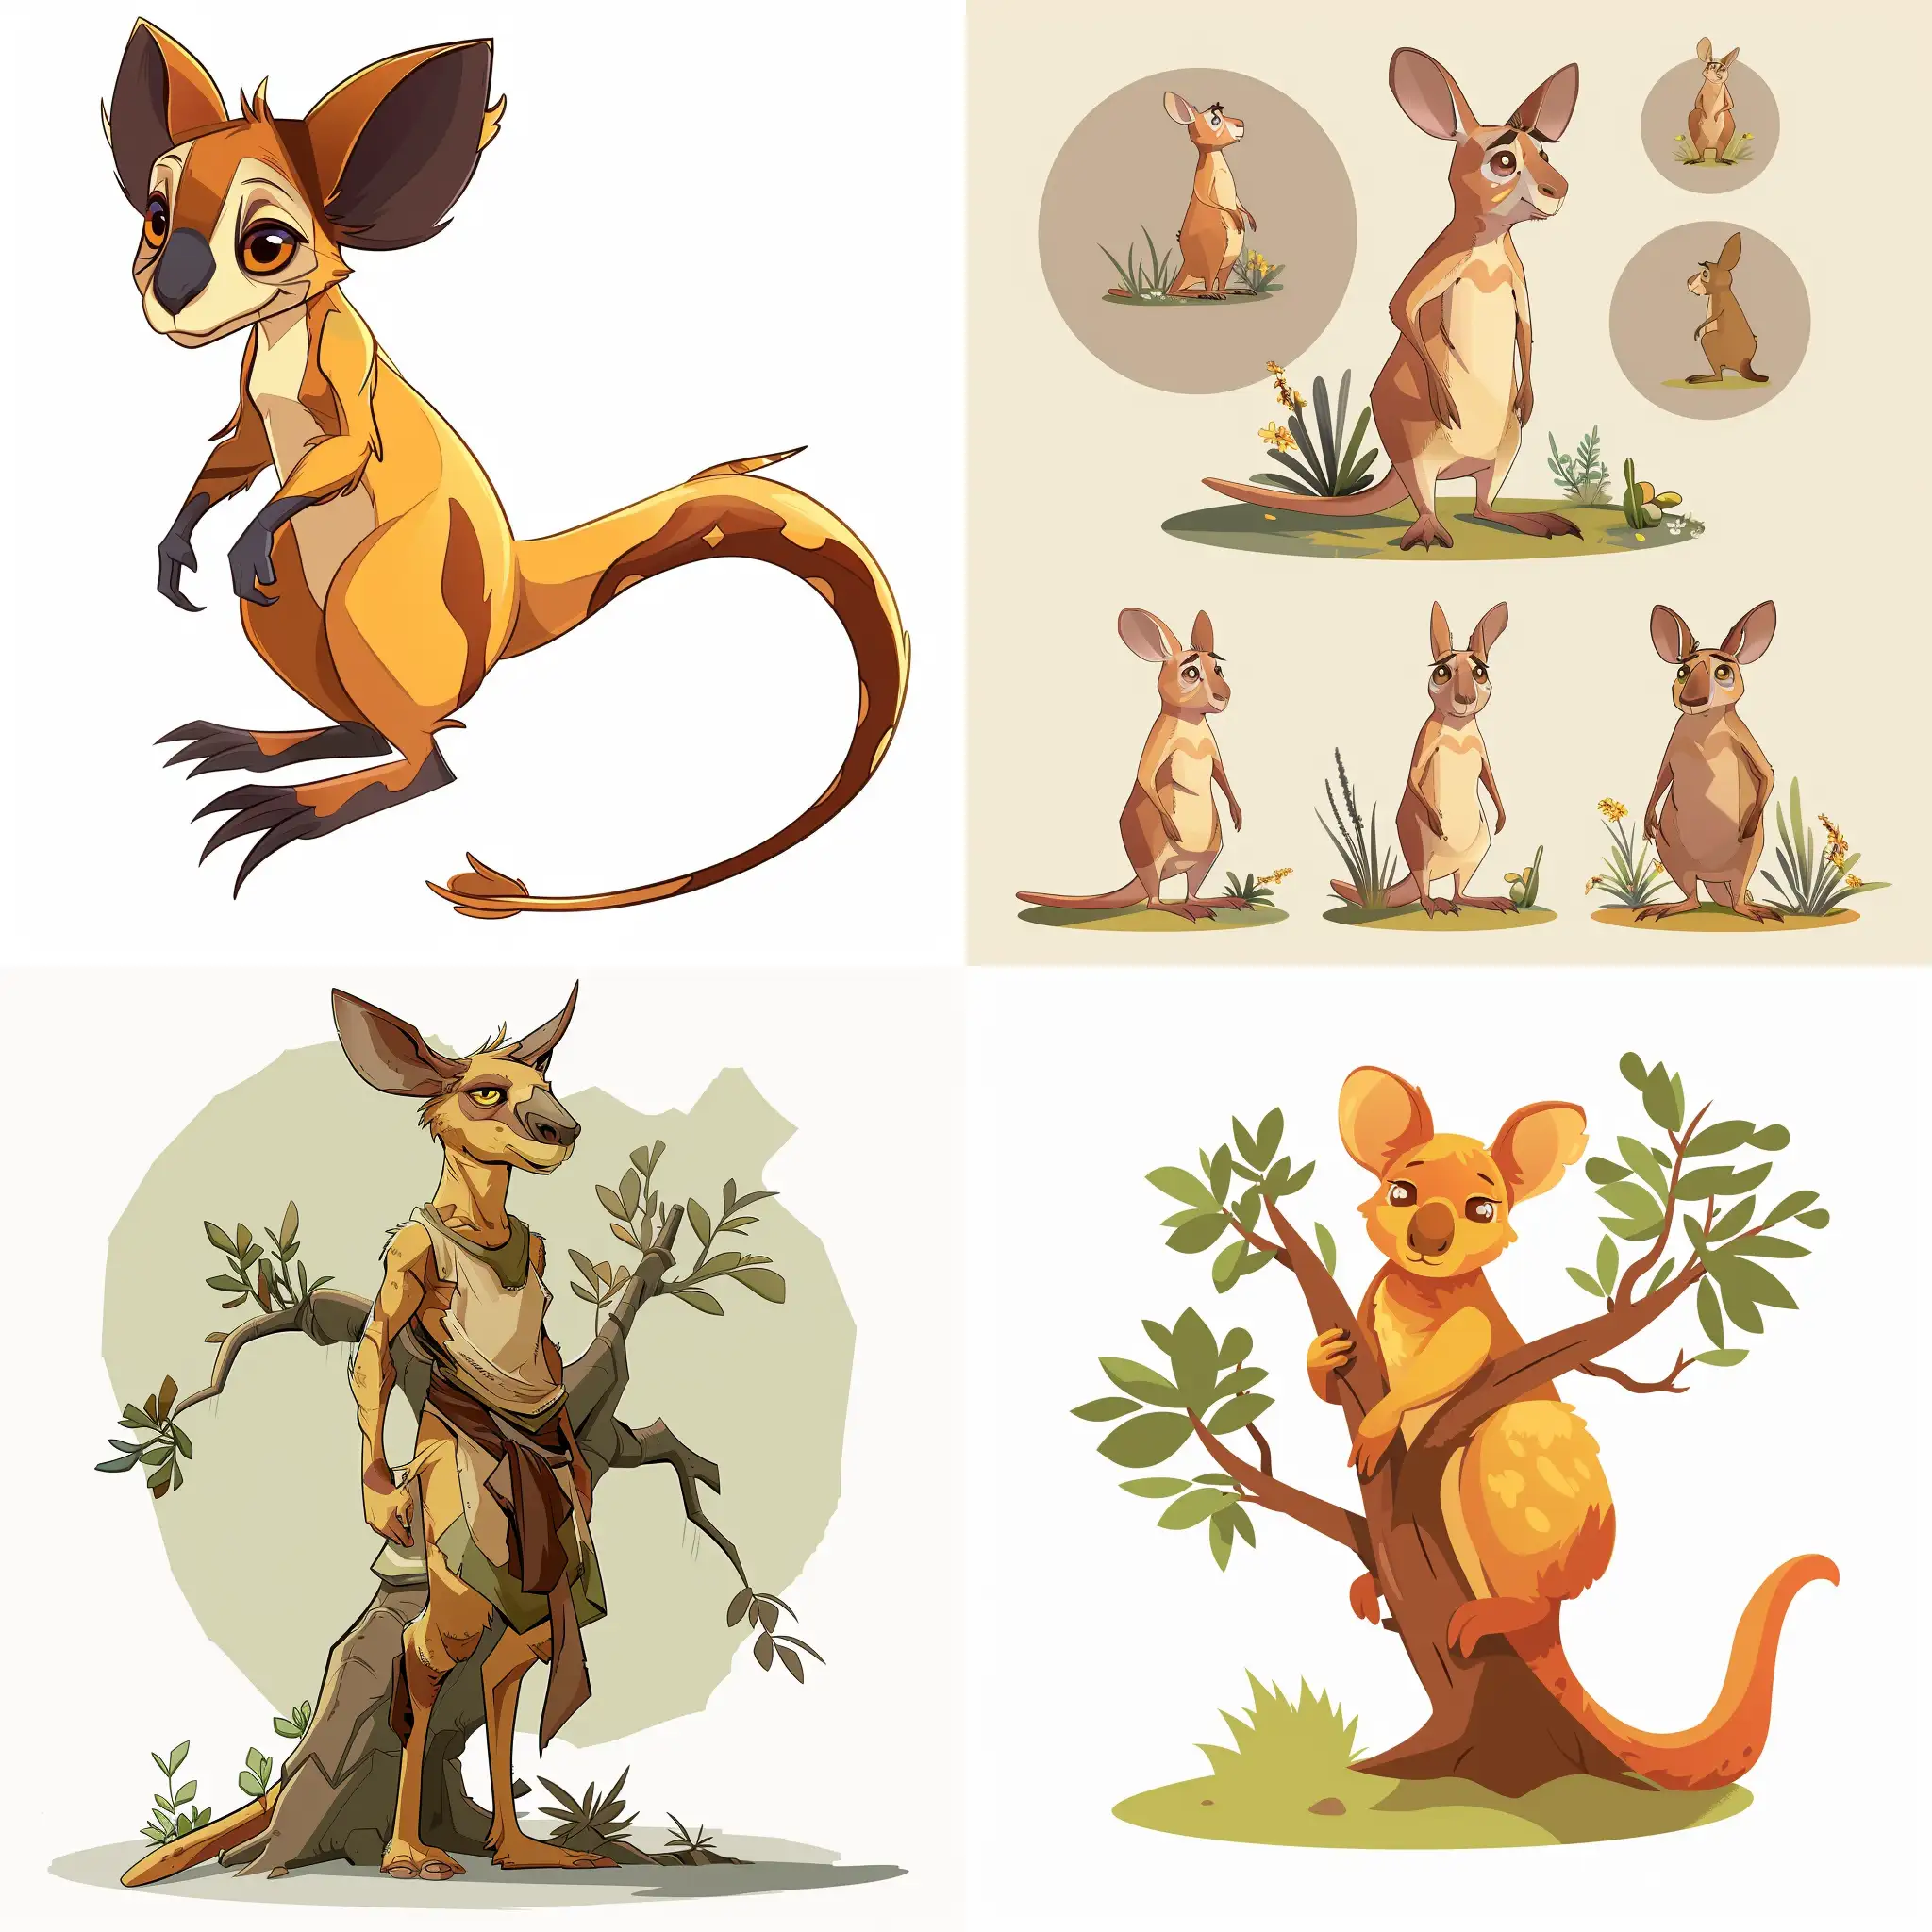 Goodfellow's Tree-kangaroo, cartoon, anime style, Character Sheet,no shadows, flat vector